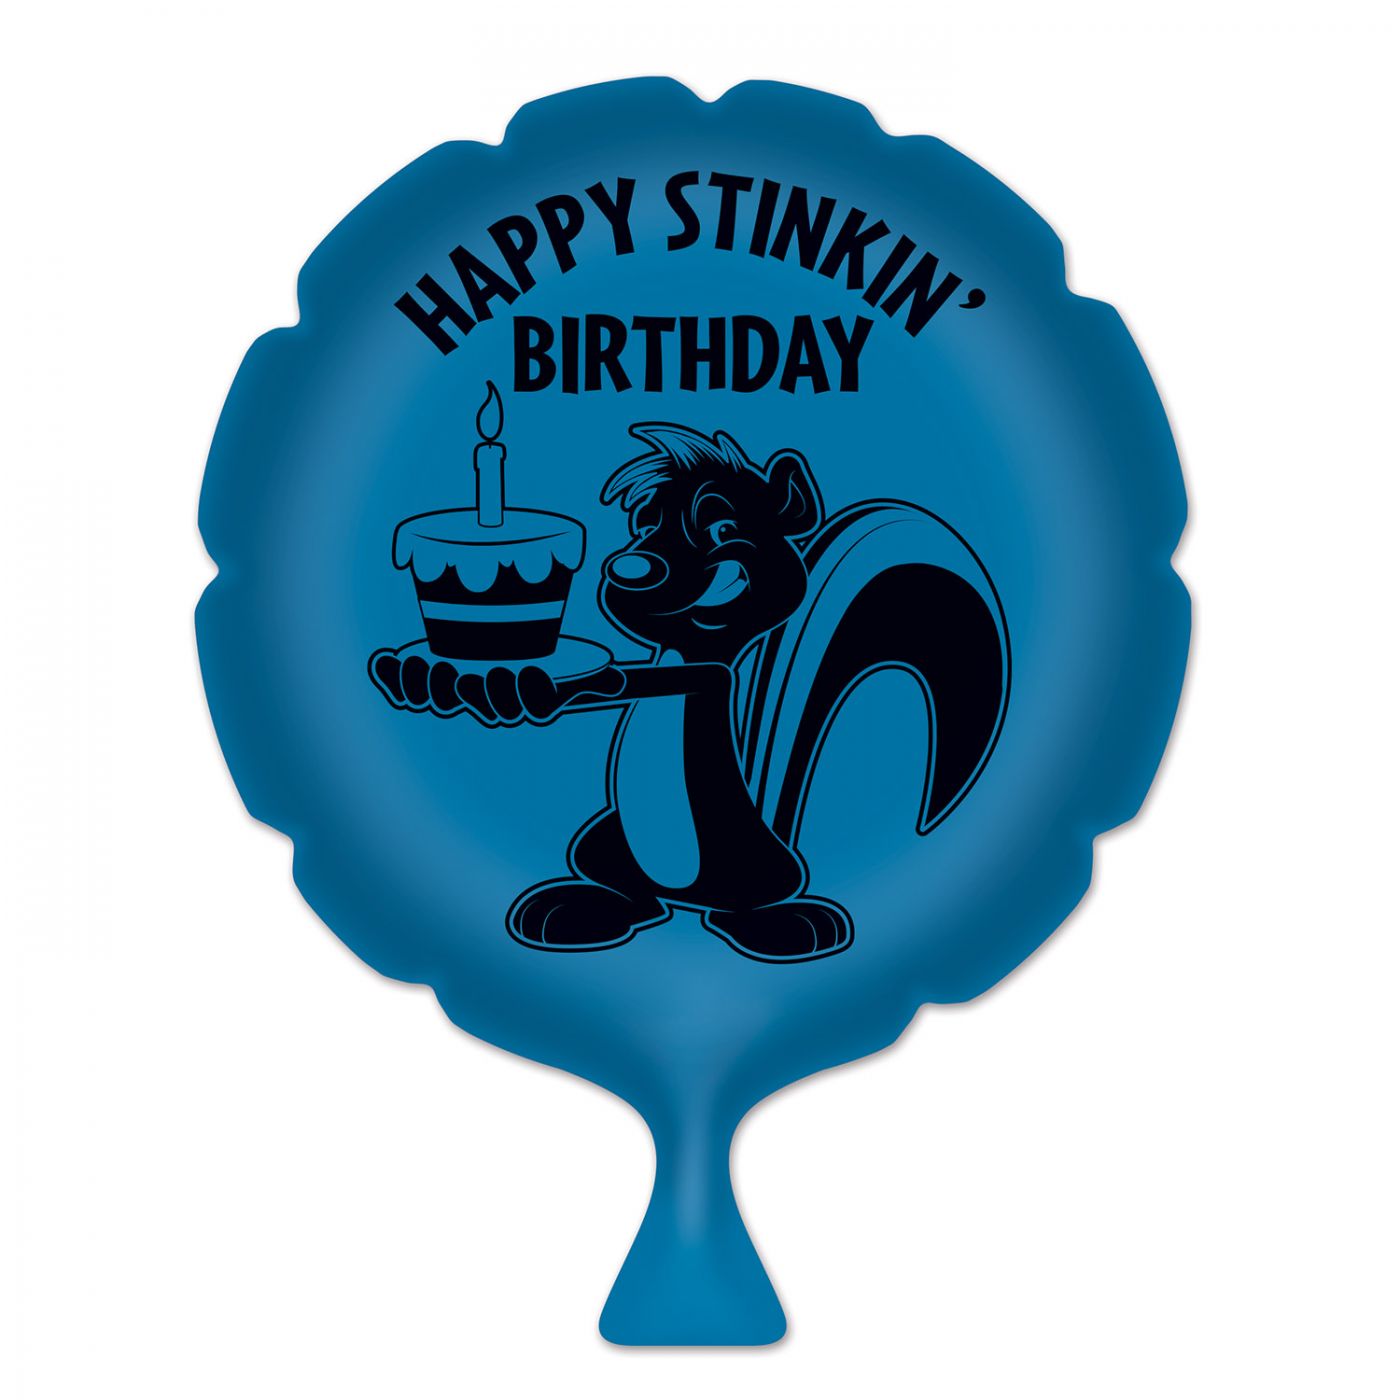 Happy Stinkin' Birthday Whoopee Cushion (6) image